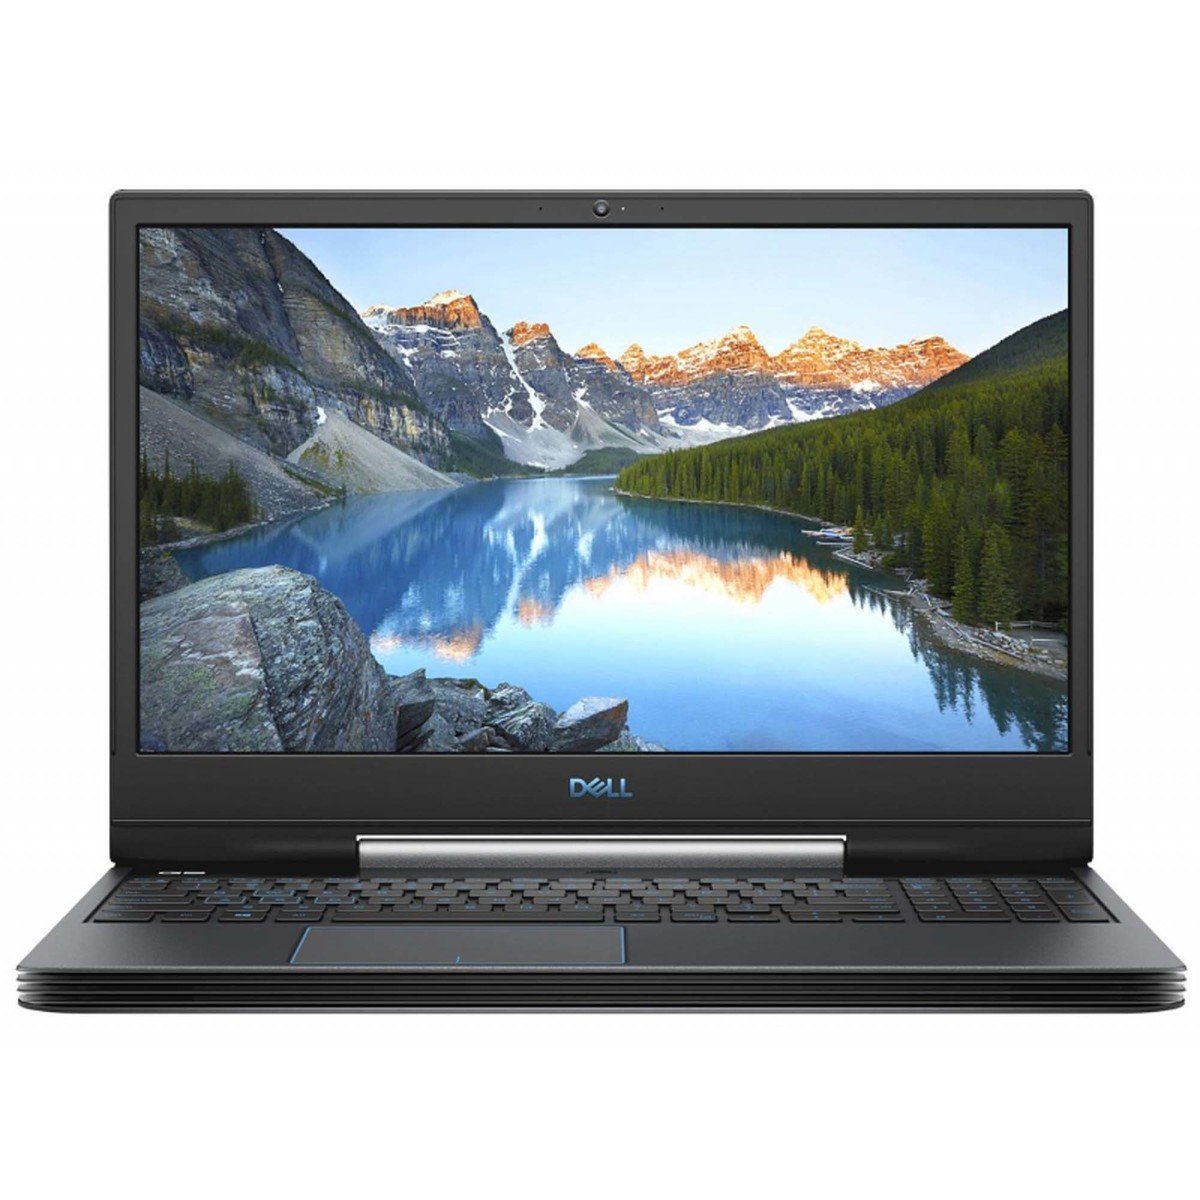 Dell G5-1277 Gaming Laptop i7-9750H,1TB HDD,16GB RAM,256GB SSD,Nvidia GTX 1650 4 GB,15.6 FHD,Windows10,Black